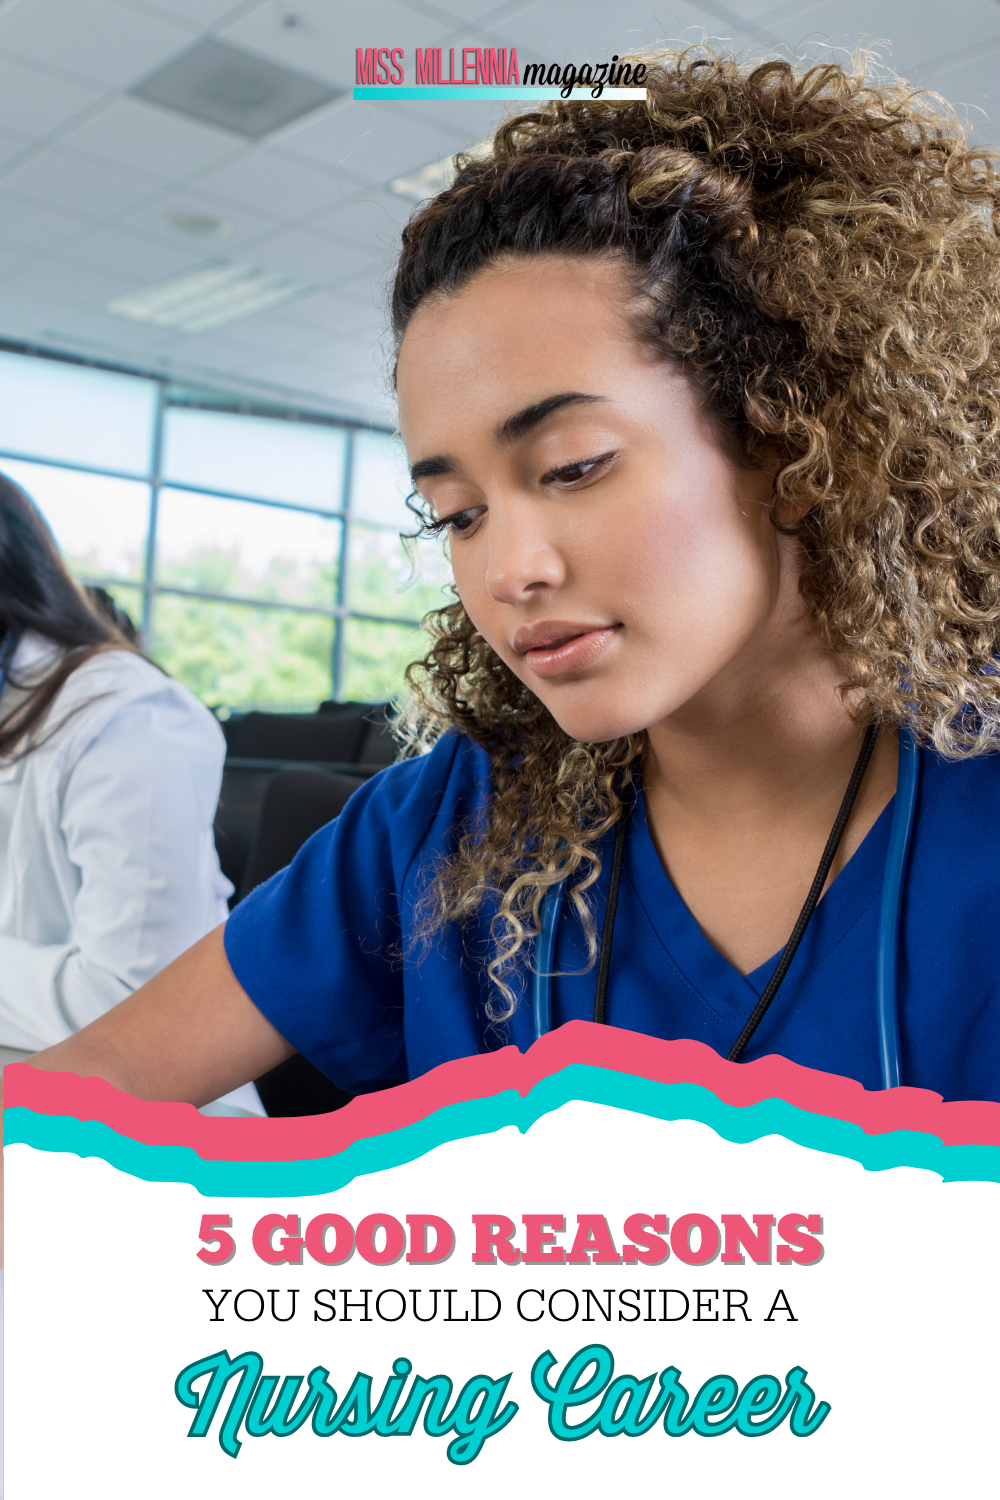 5 Good Reasons You Should Consider A Nursing Career